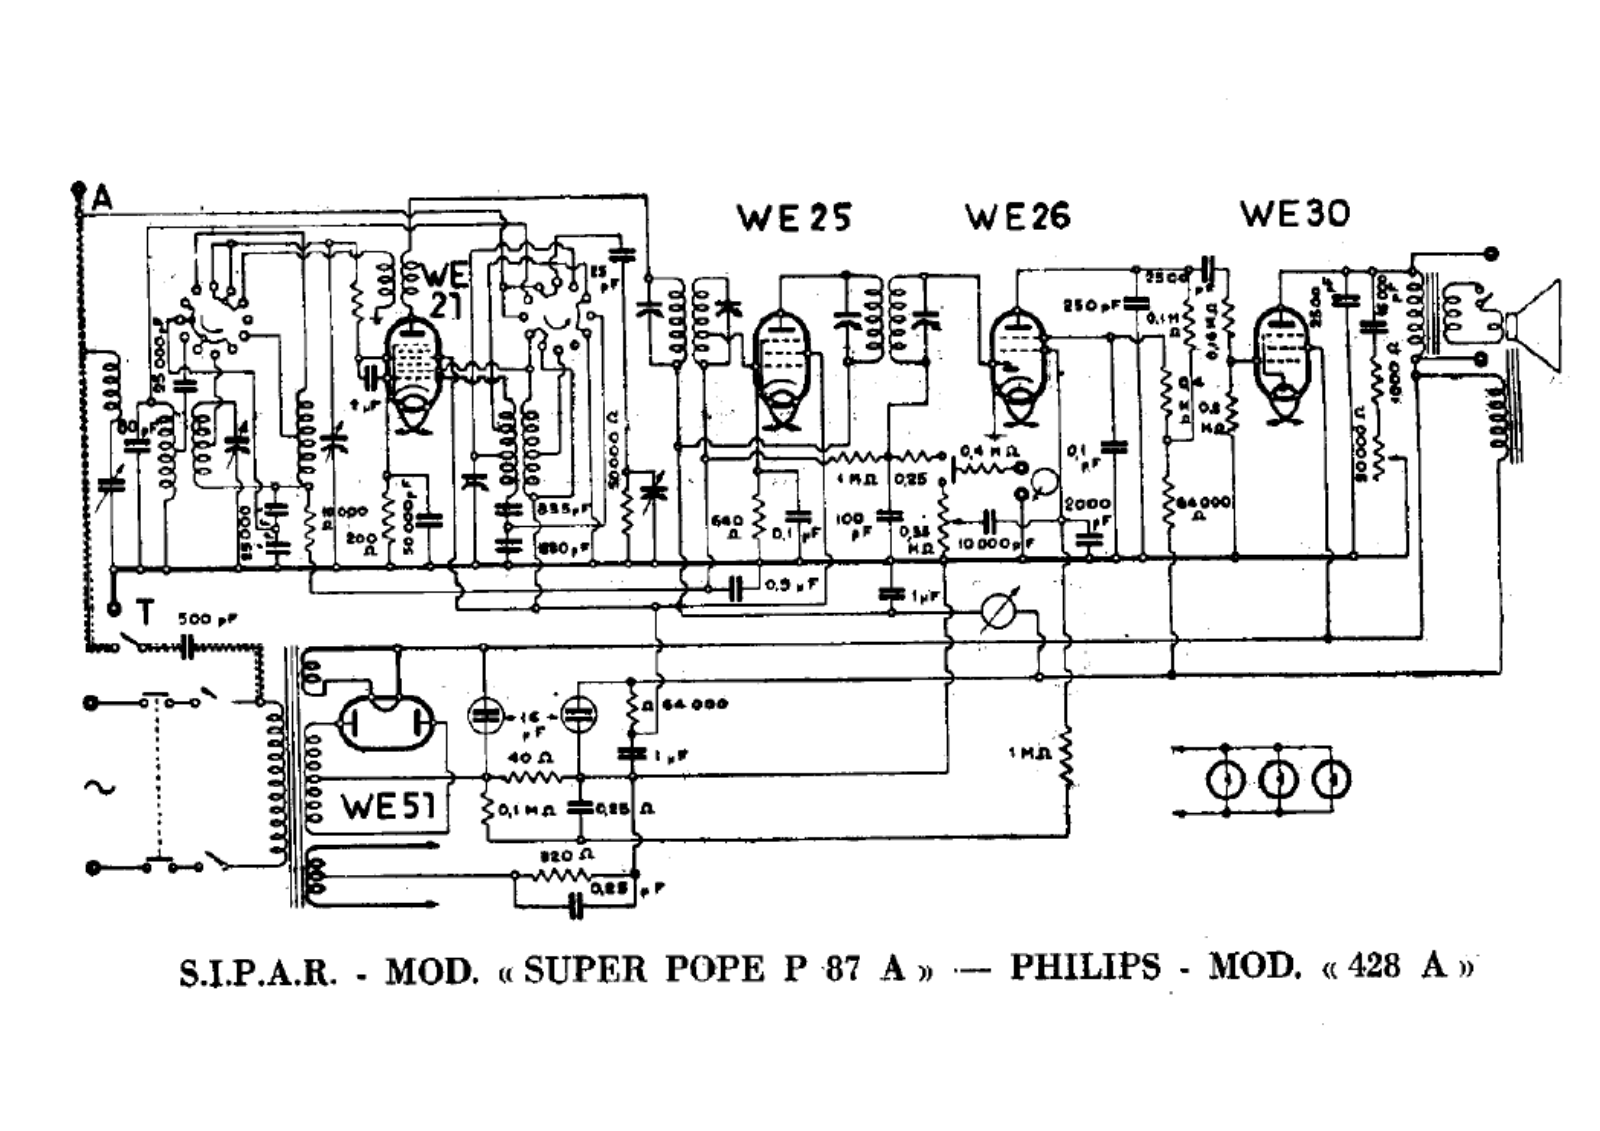 Philips 428a schematic